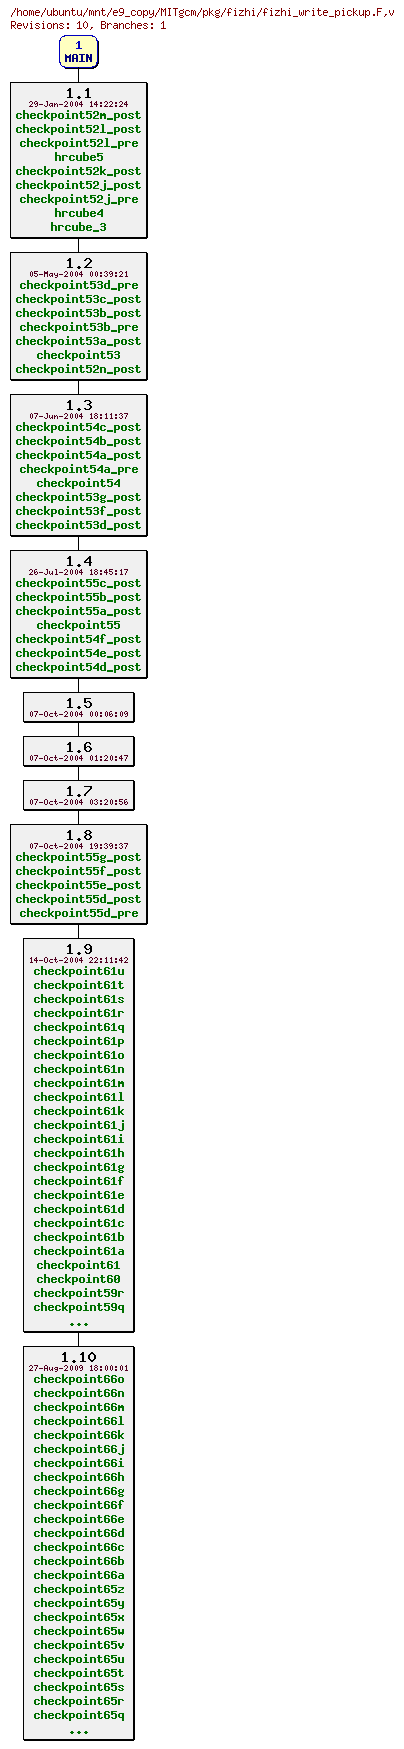 Revisions of MITgcm/pkg/fizhi/fizhi_write_pickup.F